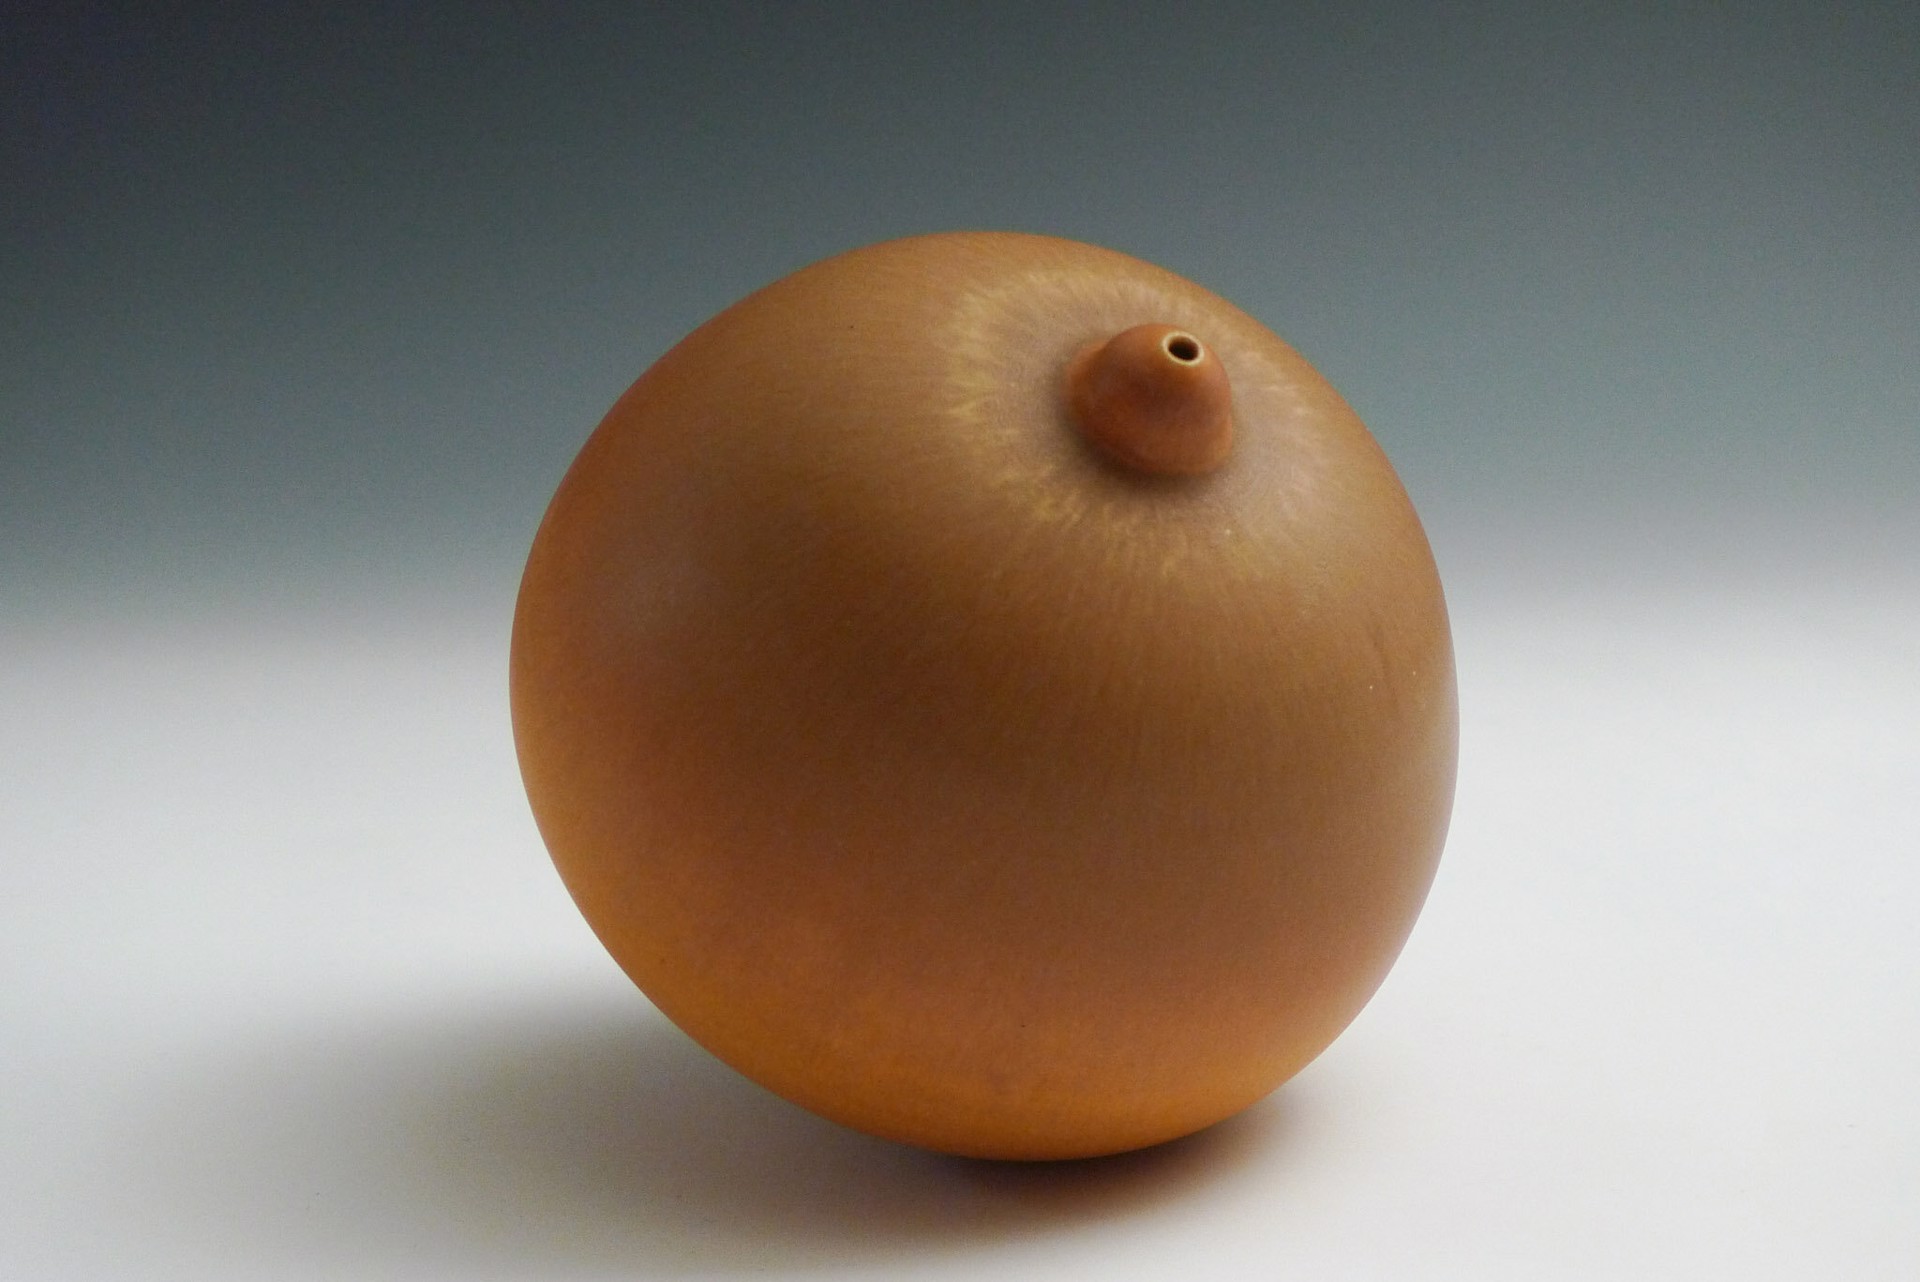 Bulb Form by Charlie Olson